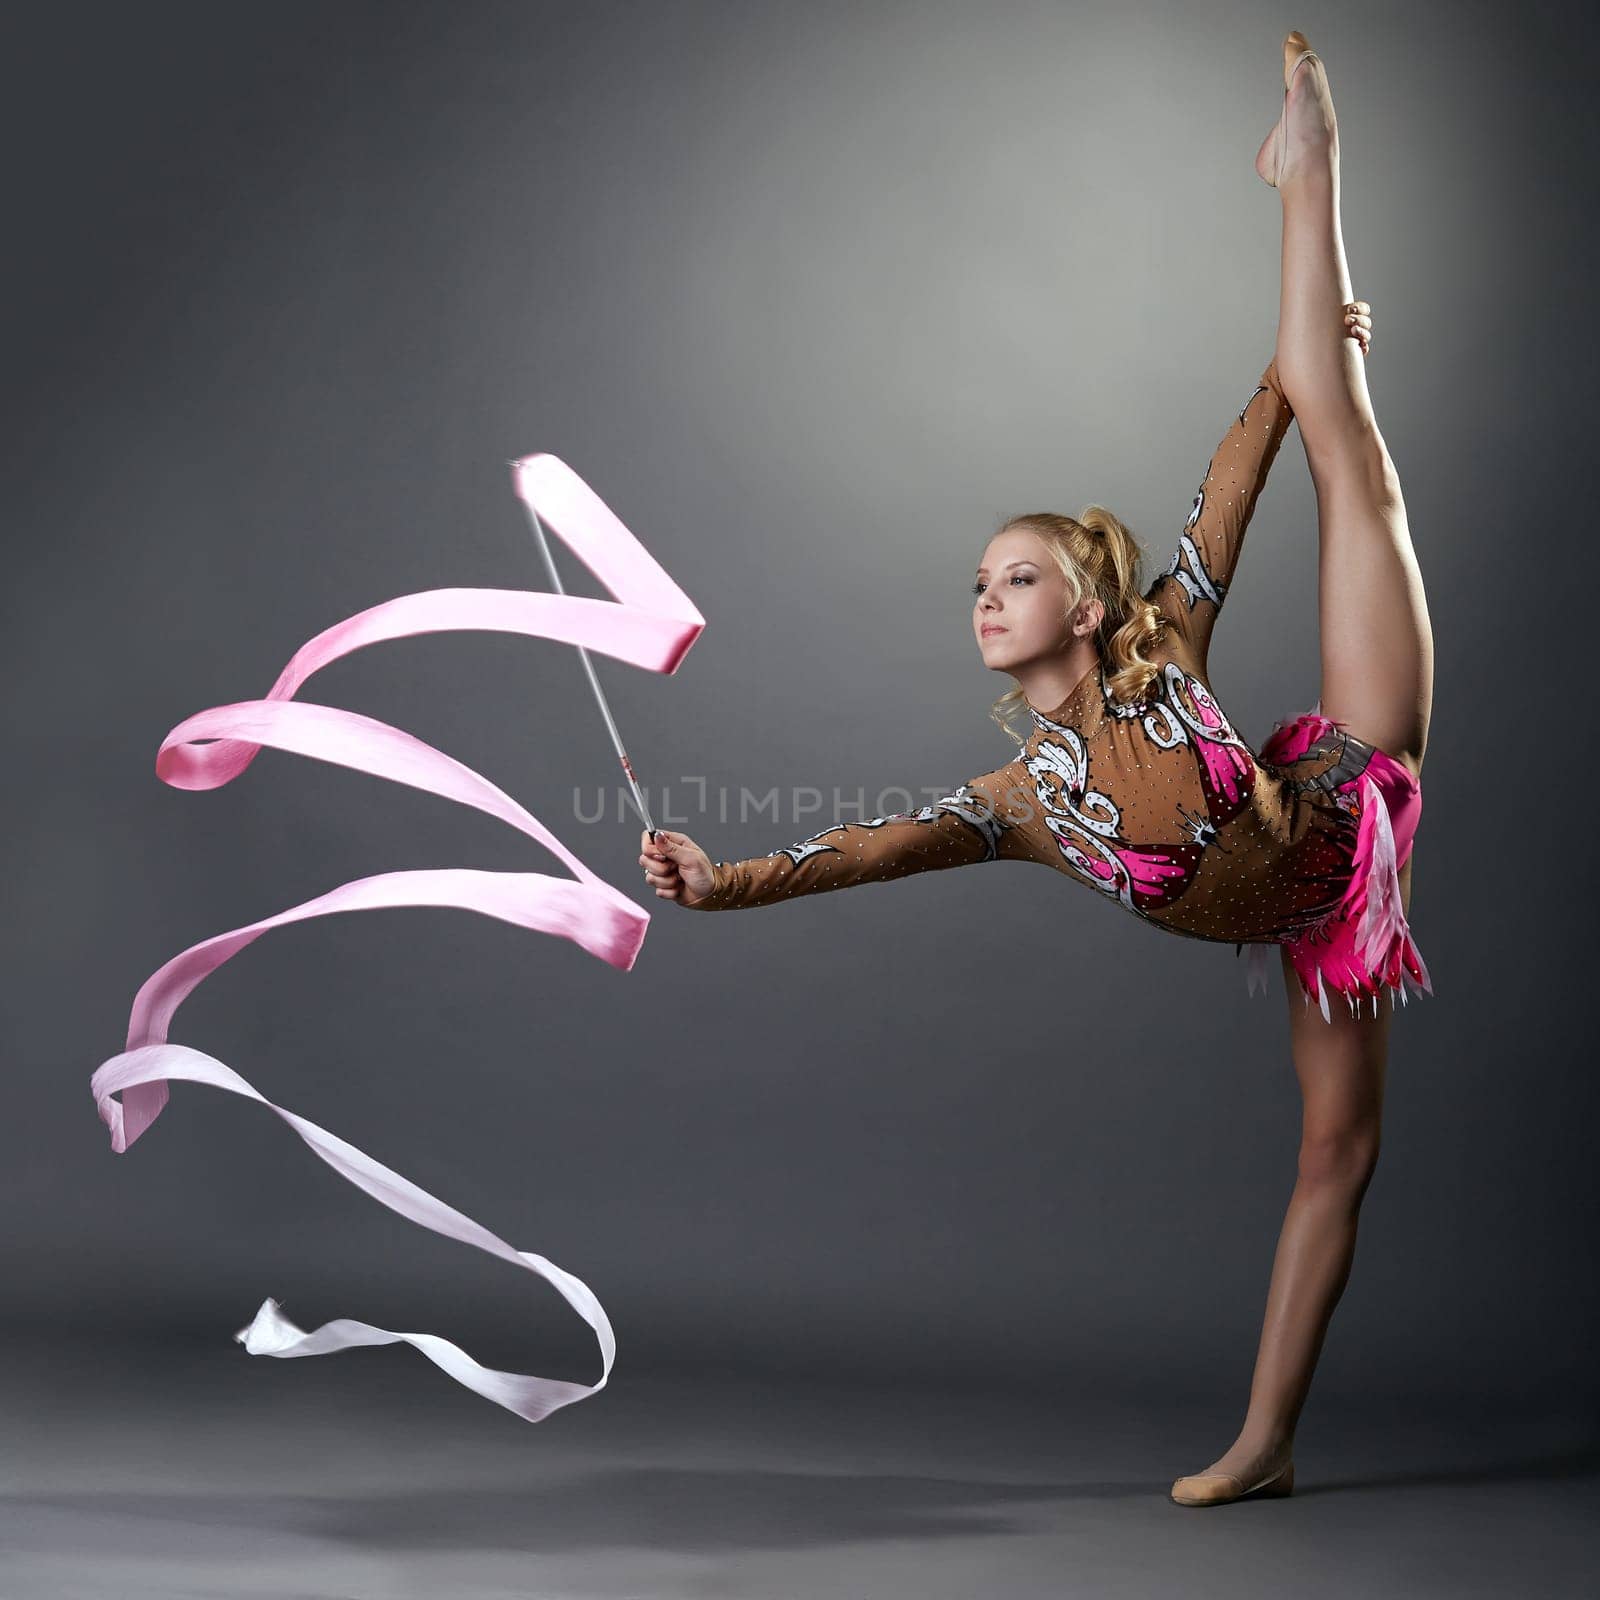 Rhythmic gymnast doing vertical split with ribbon, on grey background